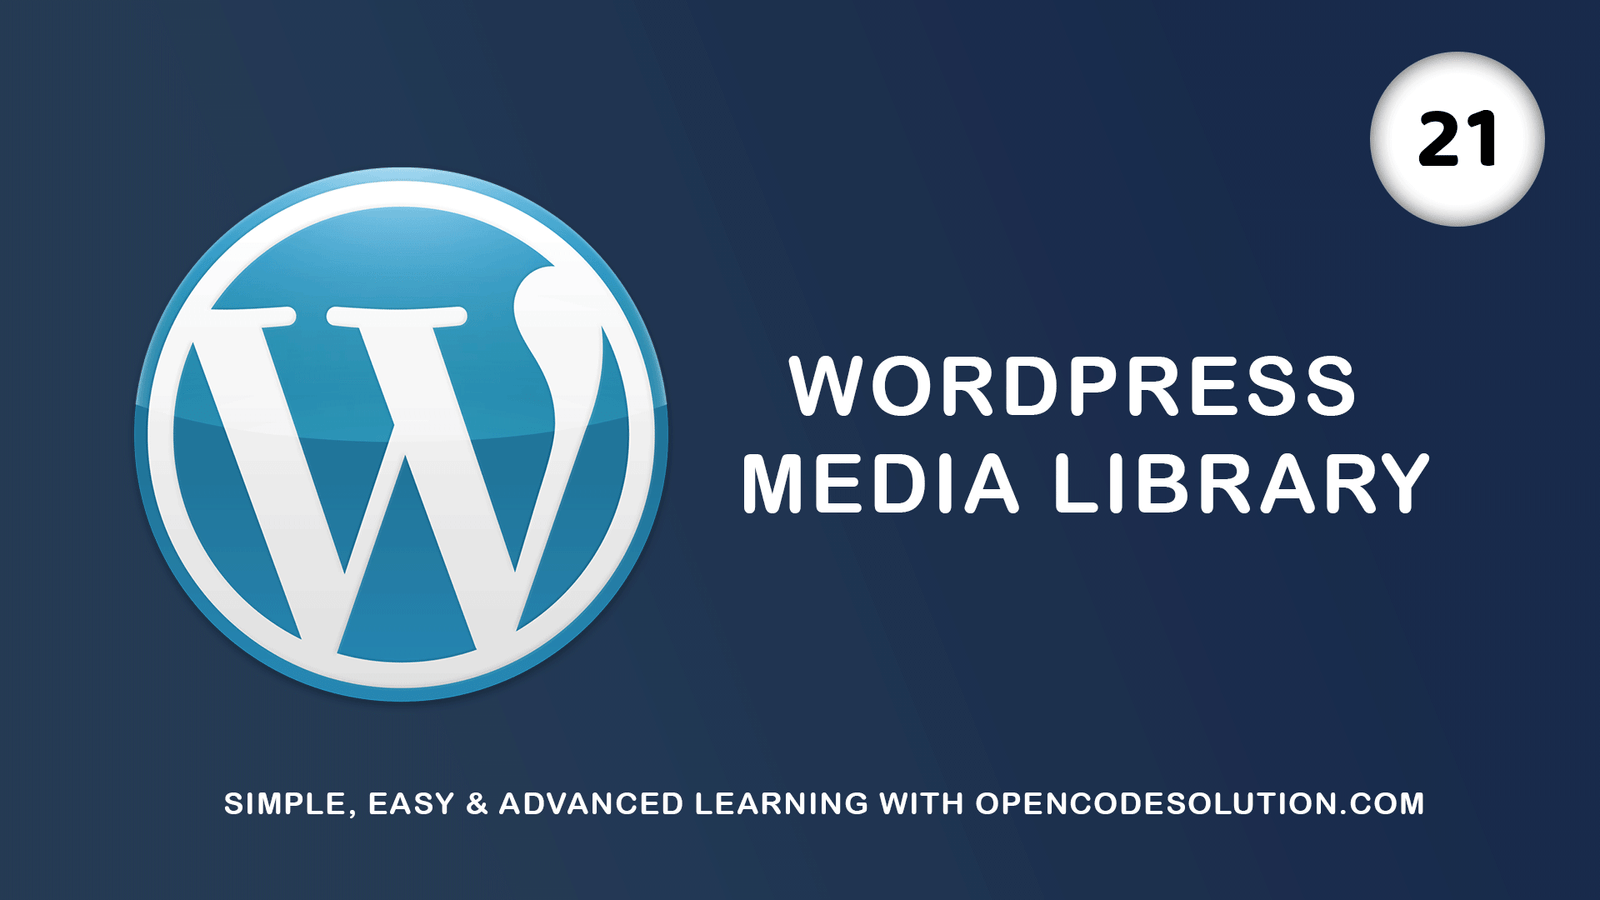 WordPress Media Library #21